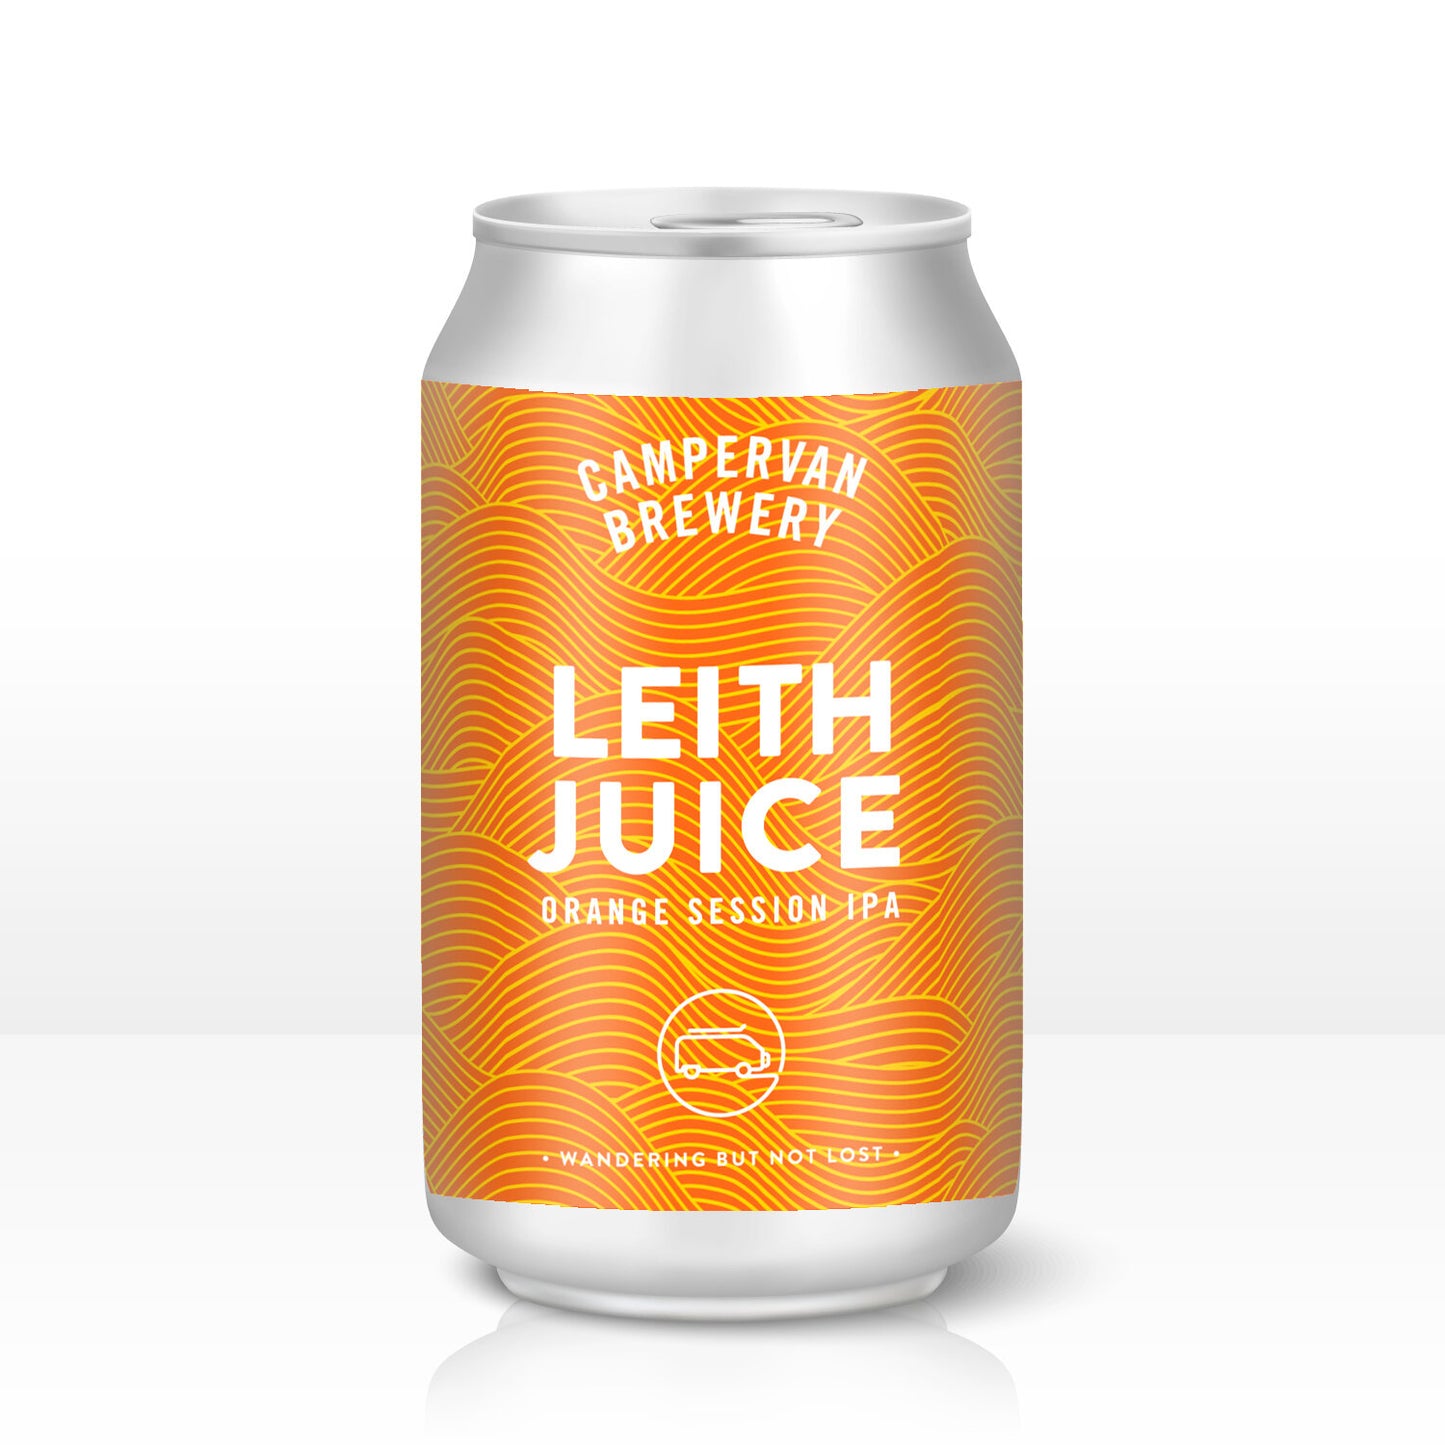 Campervan Brewery Leith Juice